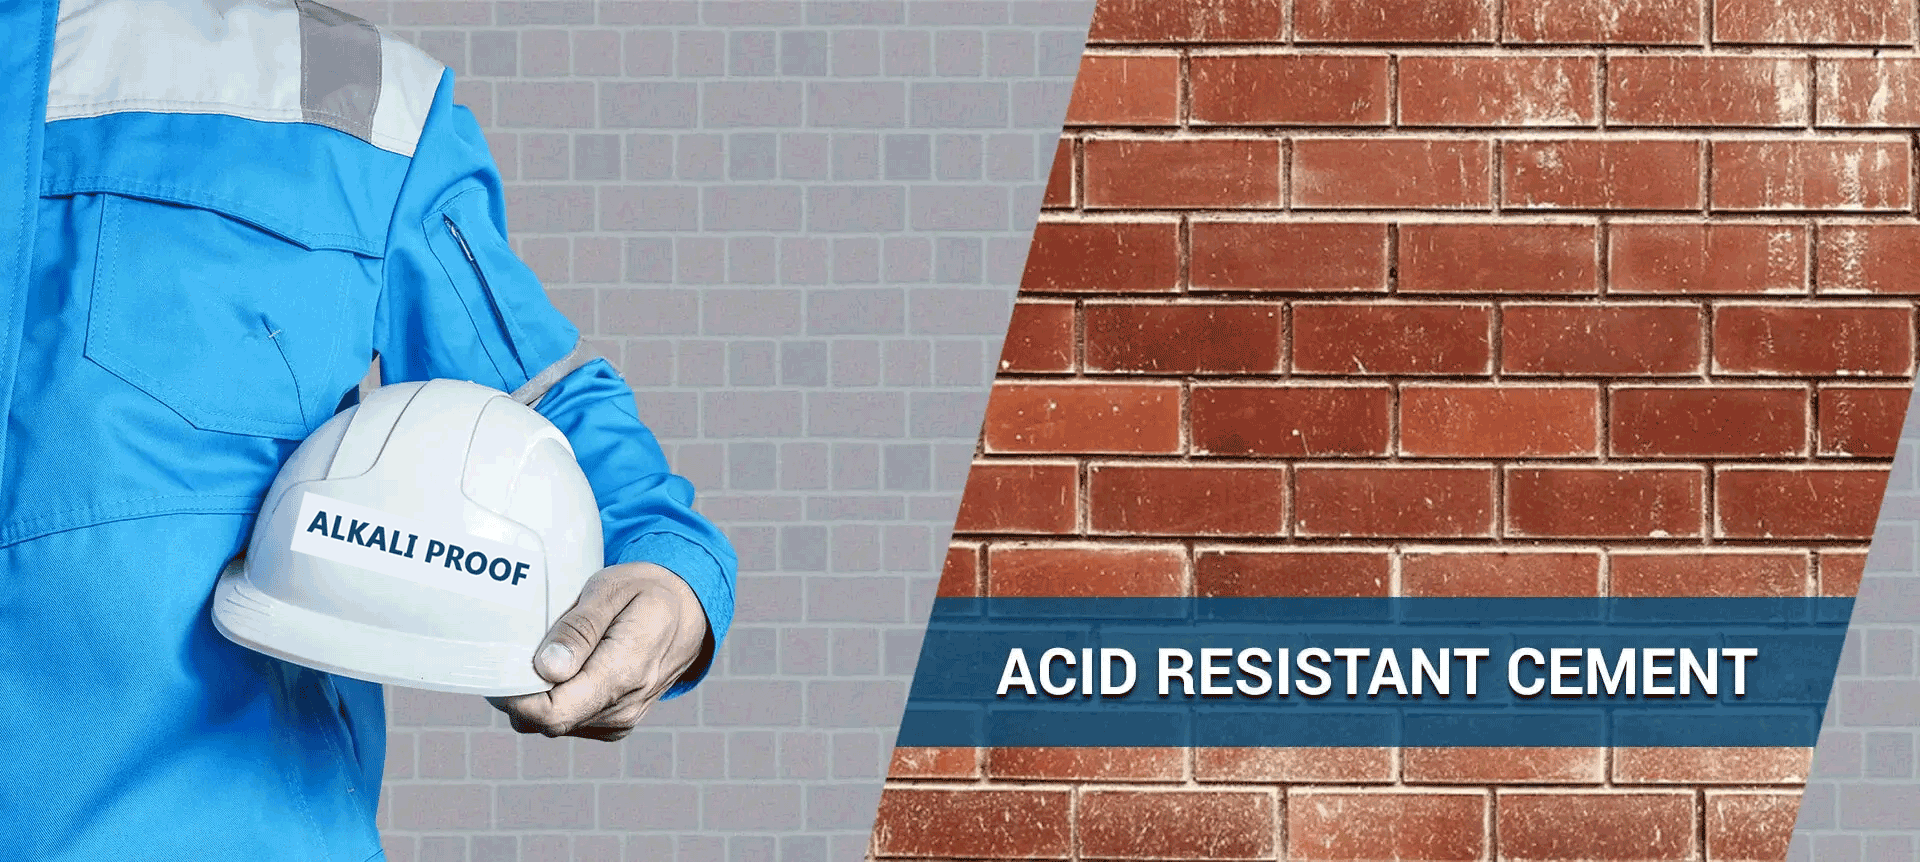 acid proof tiles manufacturers